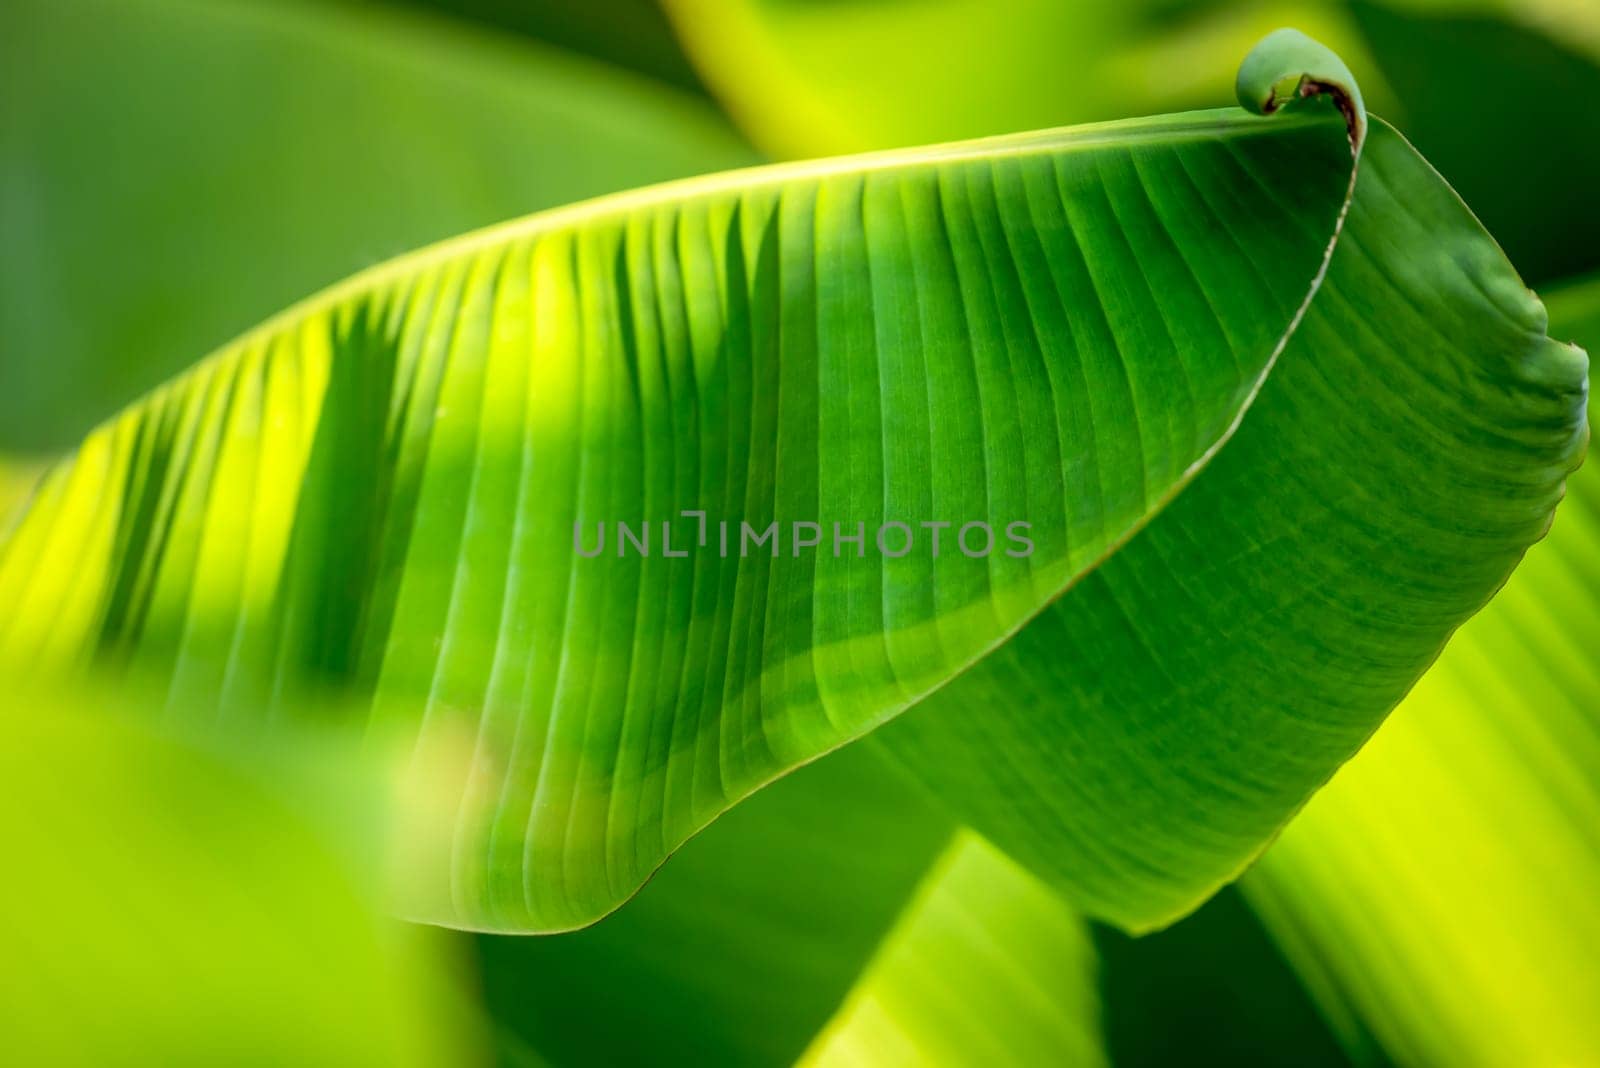 Greenery background nature plant and leaf (Banana) by PongMoji